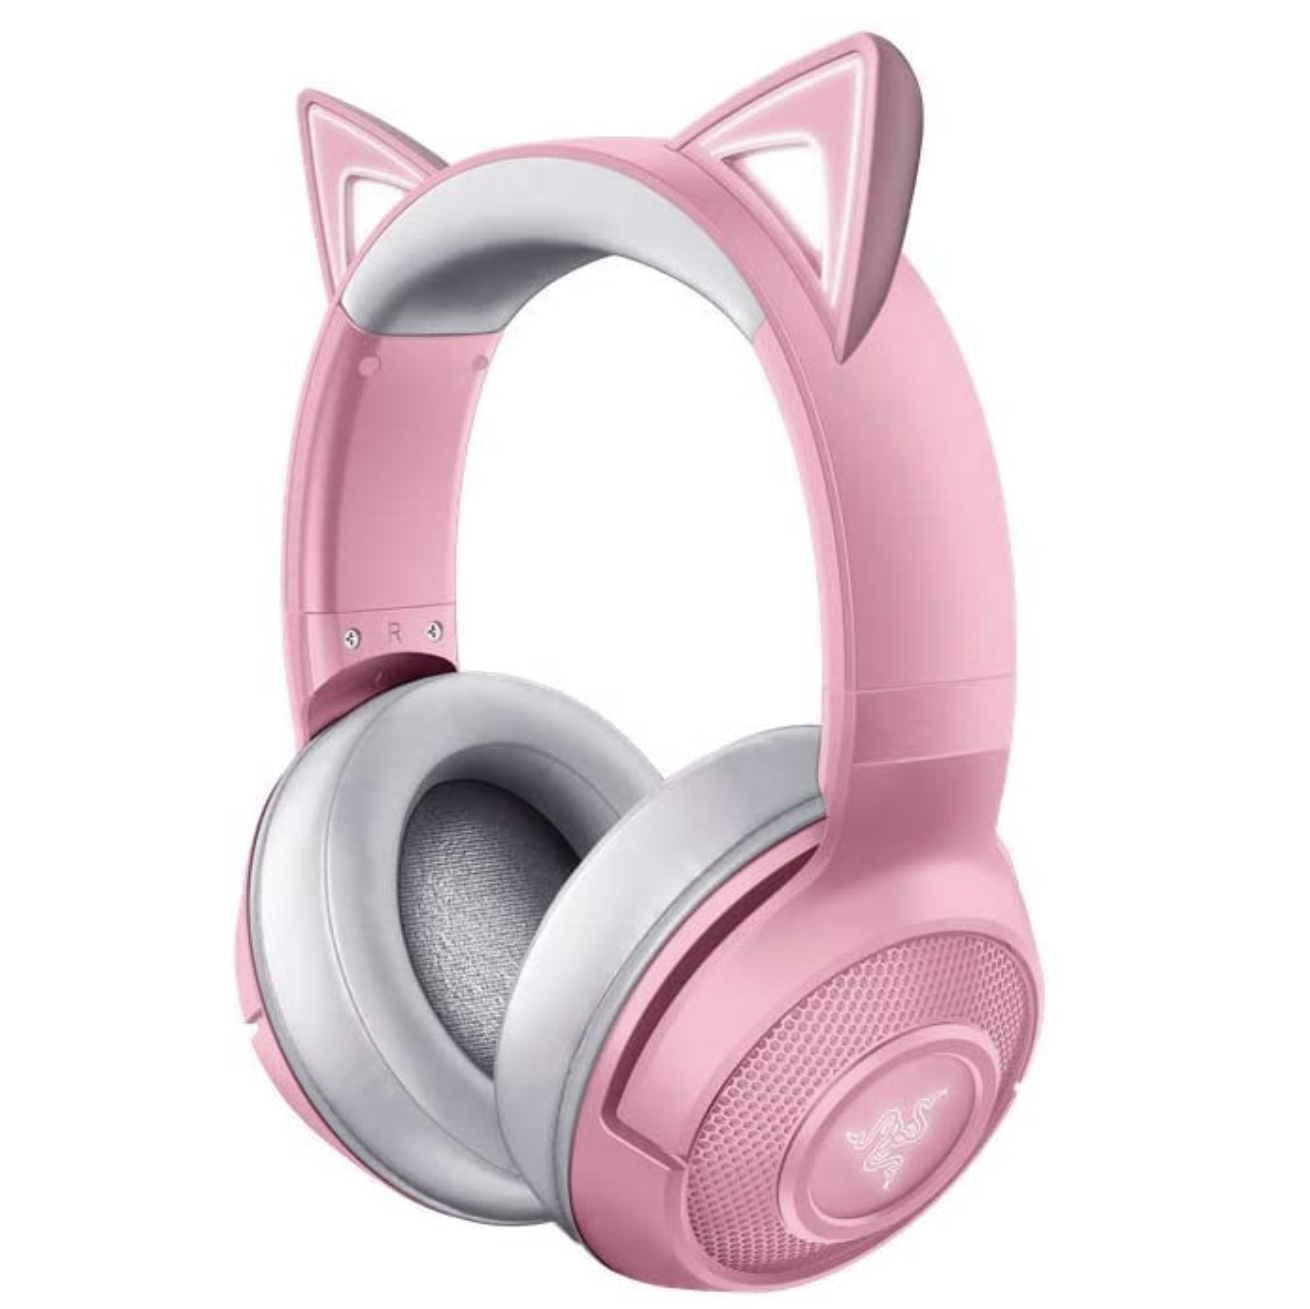 Gigi Hadid Wore Cat Ear Headphones And I Desperately Want A Pair